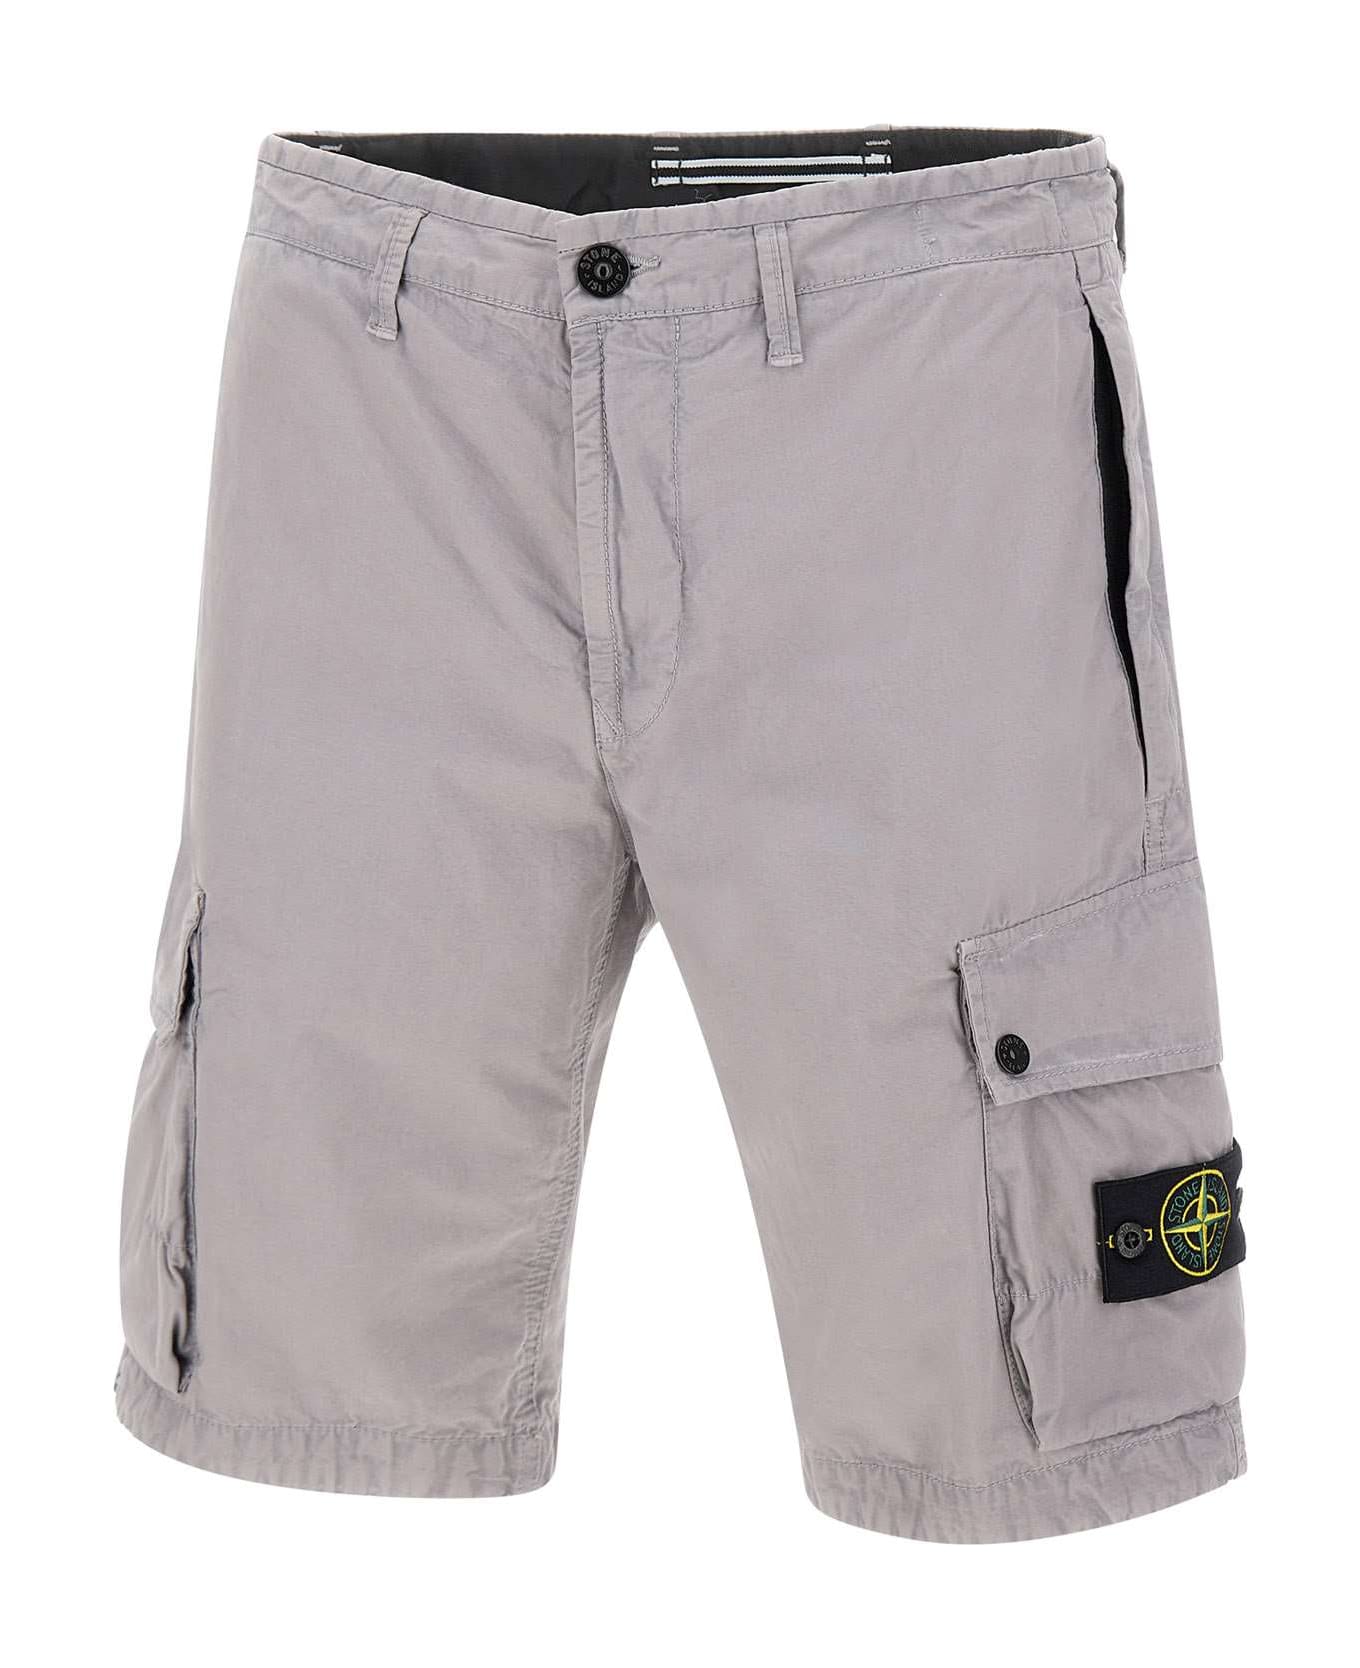 Stone Island Cotton Shorts - GREY